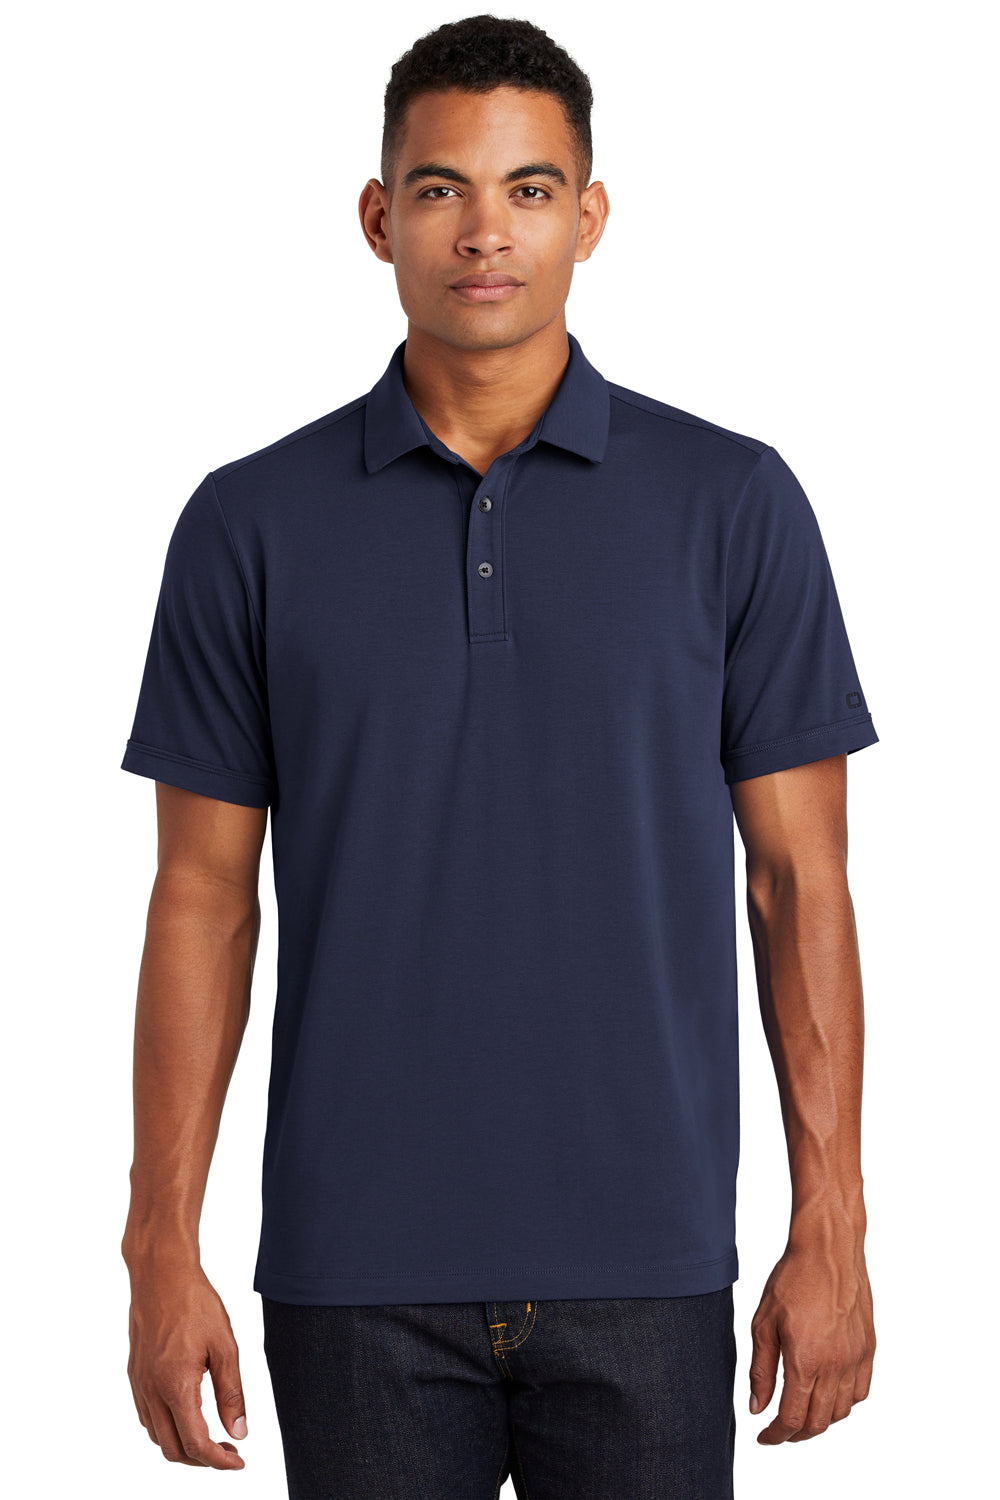 Ogio OG138 Mens Limit Moisture Wicking Short Sleeve Polo Shirt Navy Blue Front